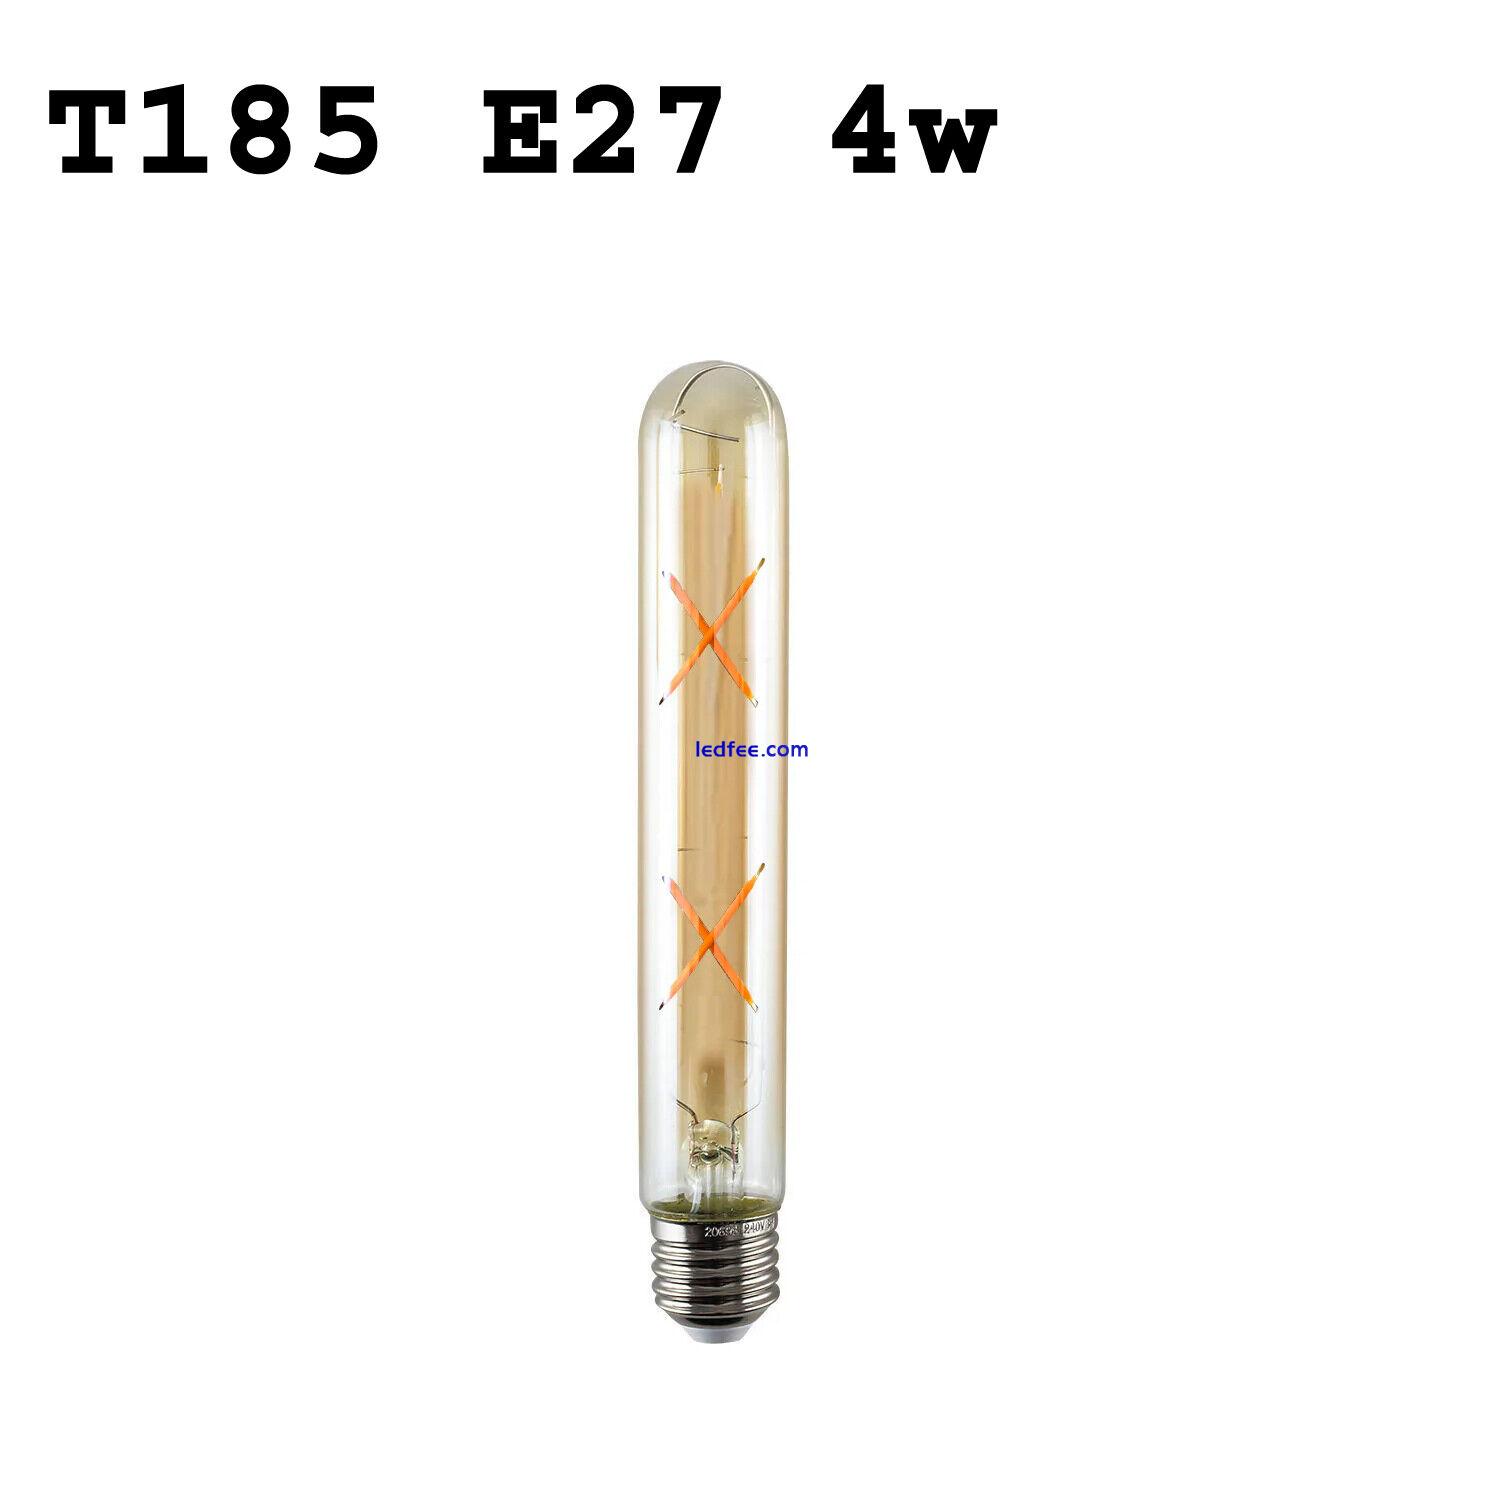 T185 Antique Style Edison Vintage LED Light Bulbs Industrial Retro Lamps E27 4W 1 